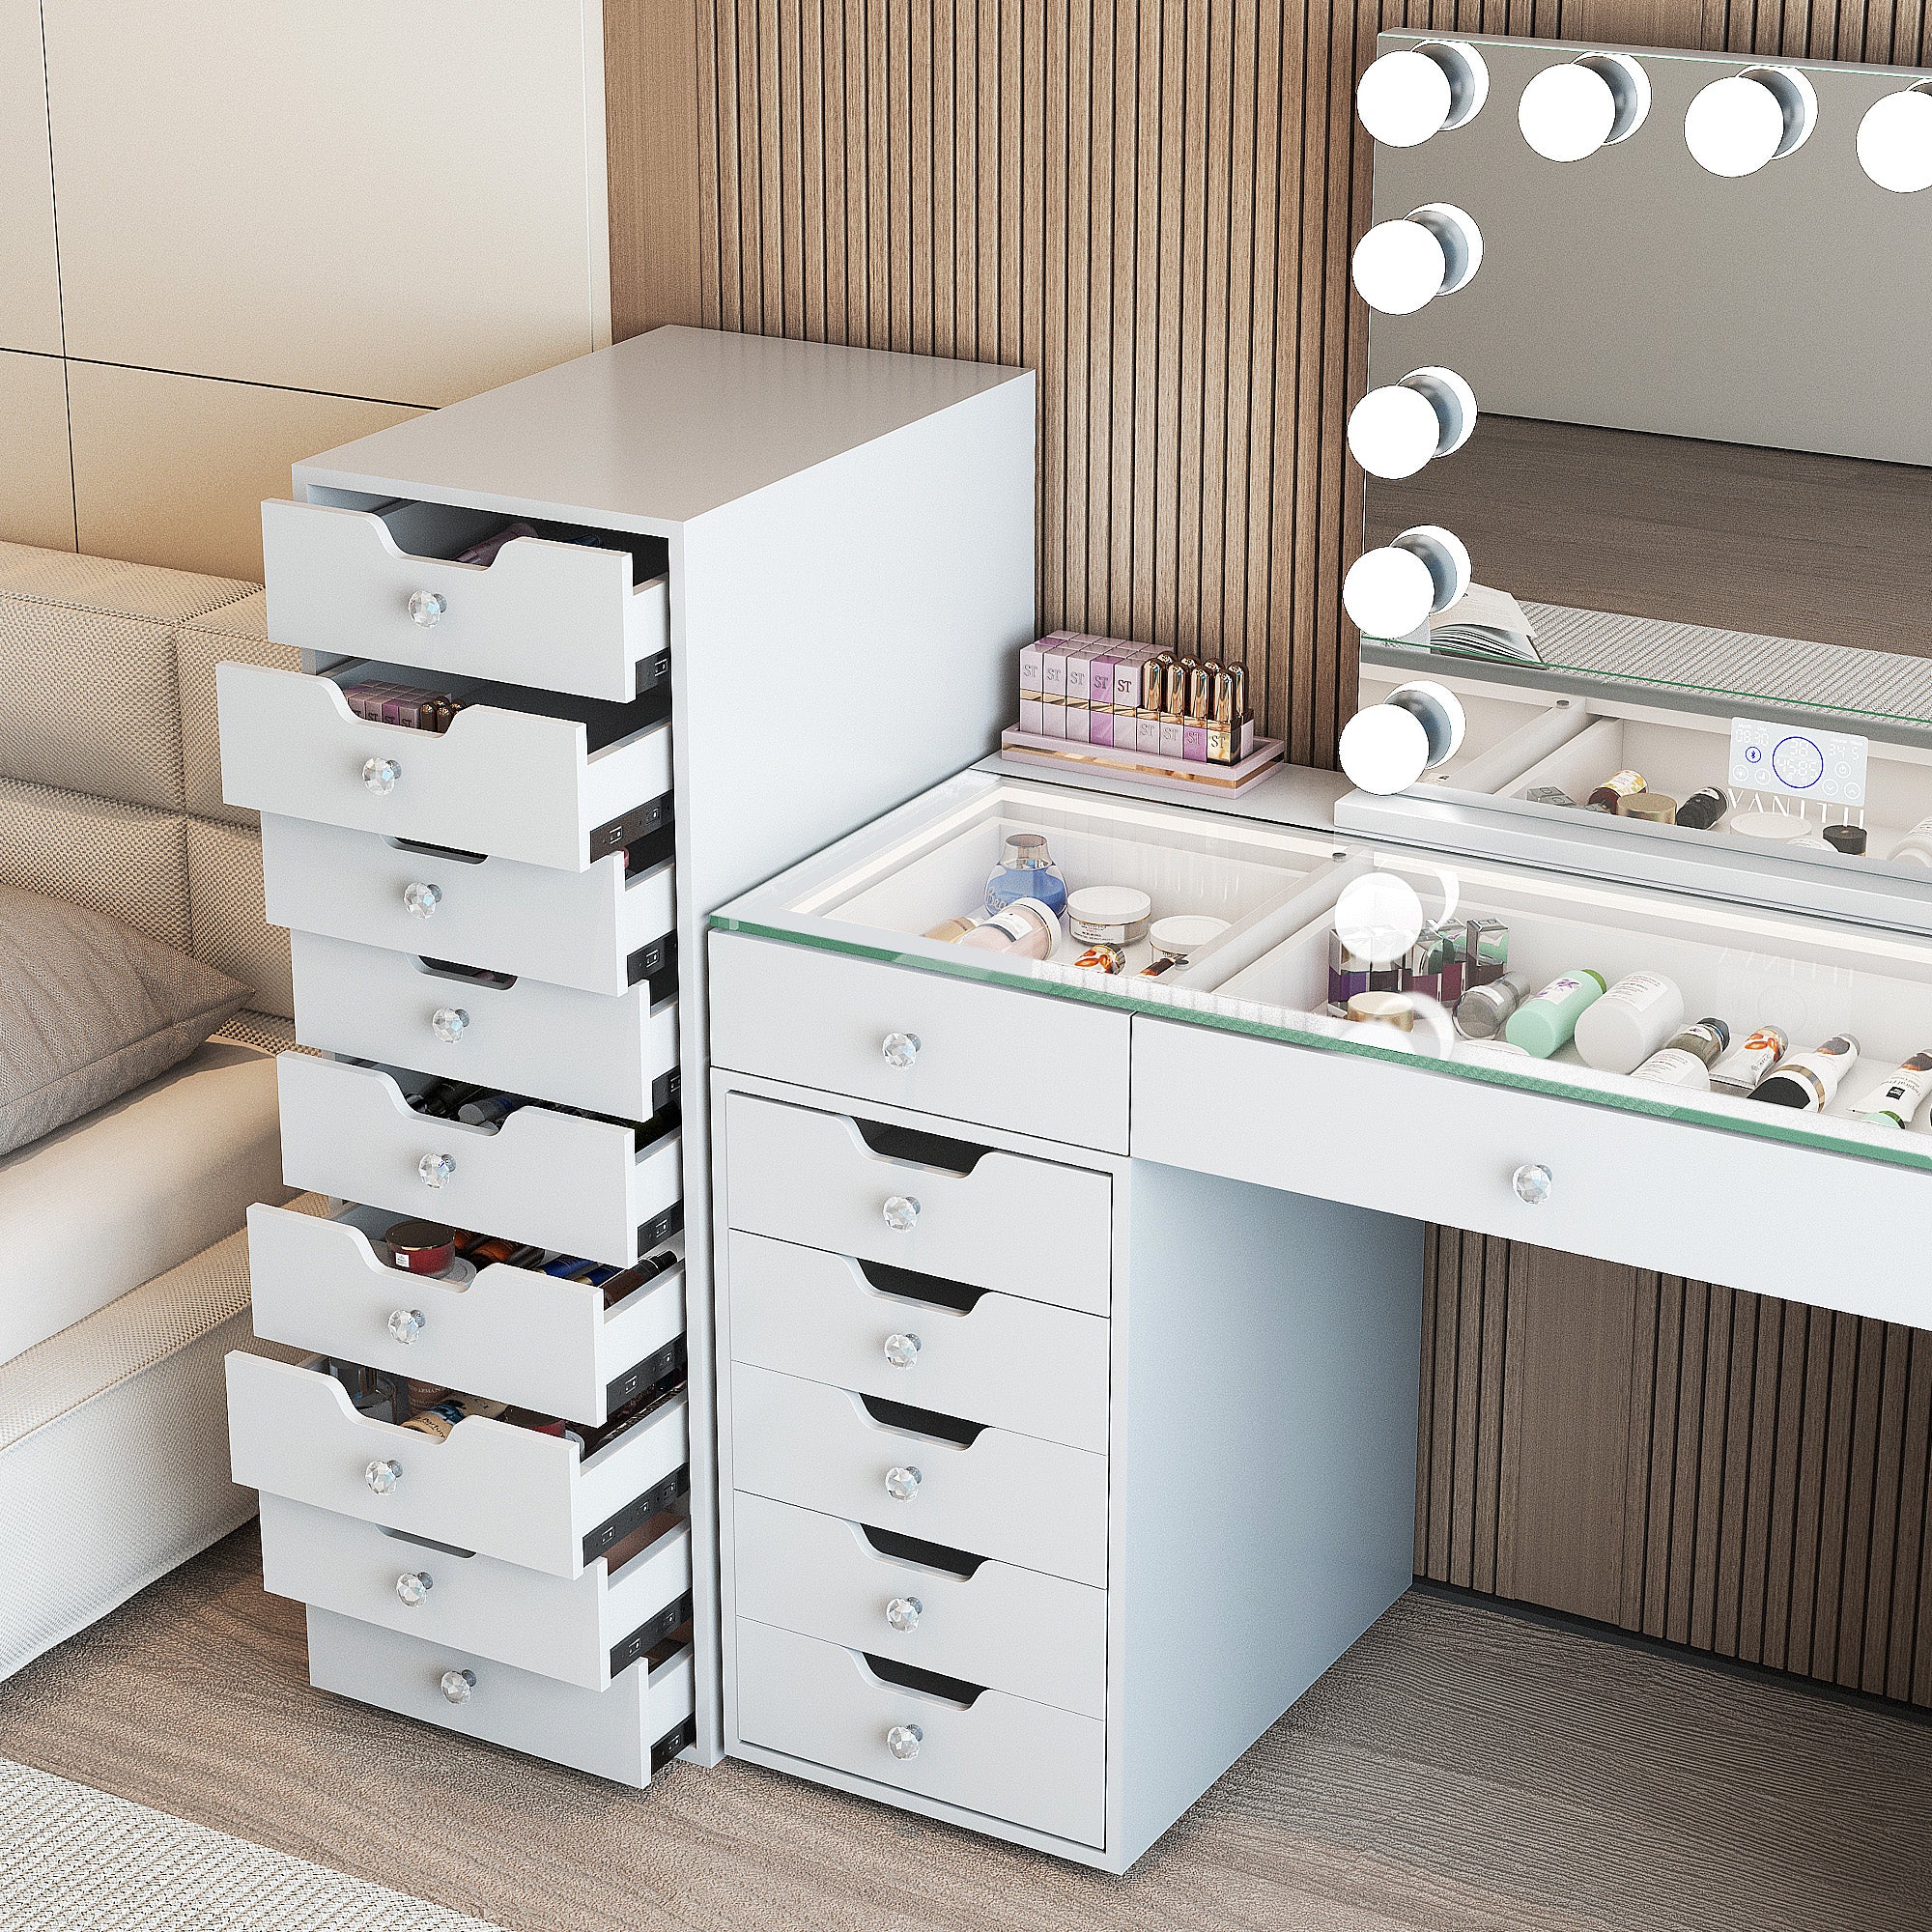 VANITII 9-Drawer Makeup Vanity Storage Unit